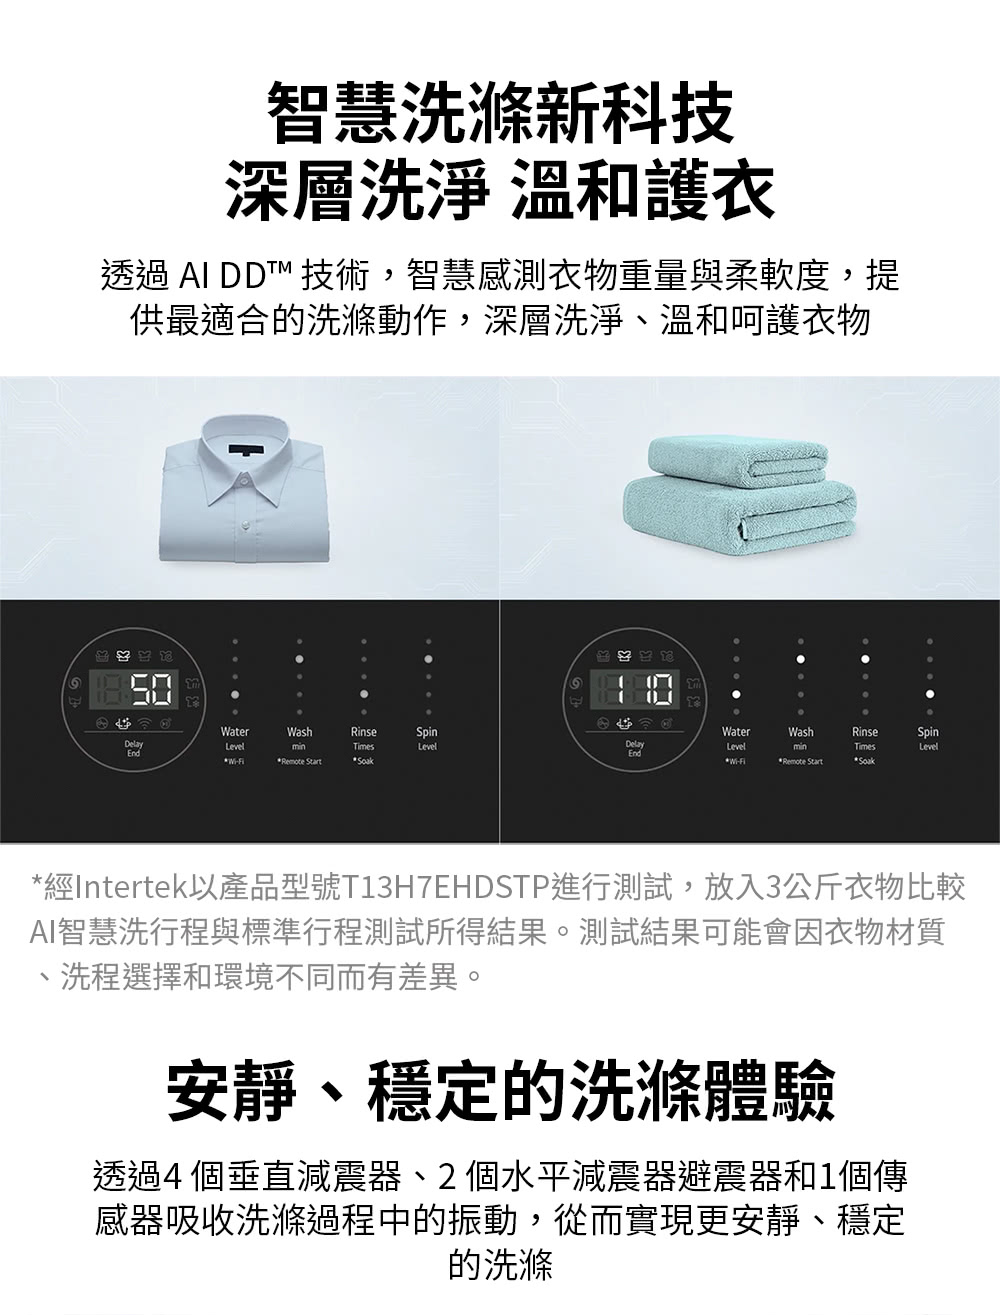 LG 樂金 15公斤◆AI DD™智慧直驅變頻洗衣機 ◆極光